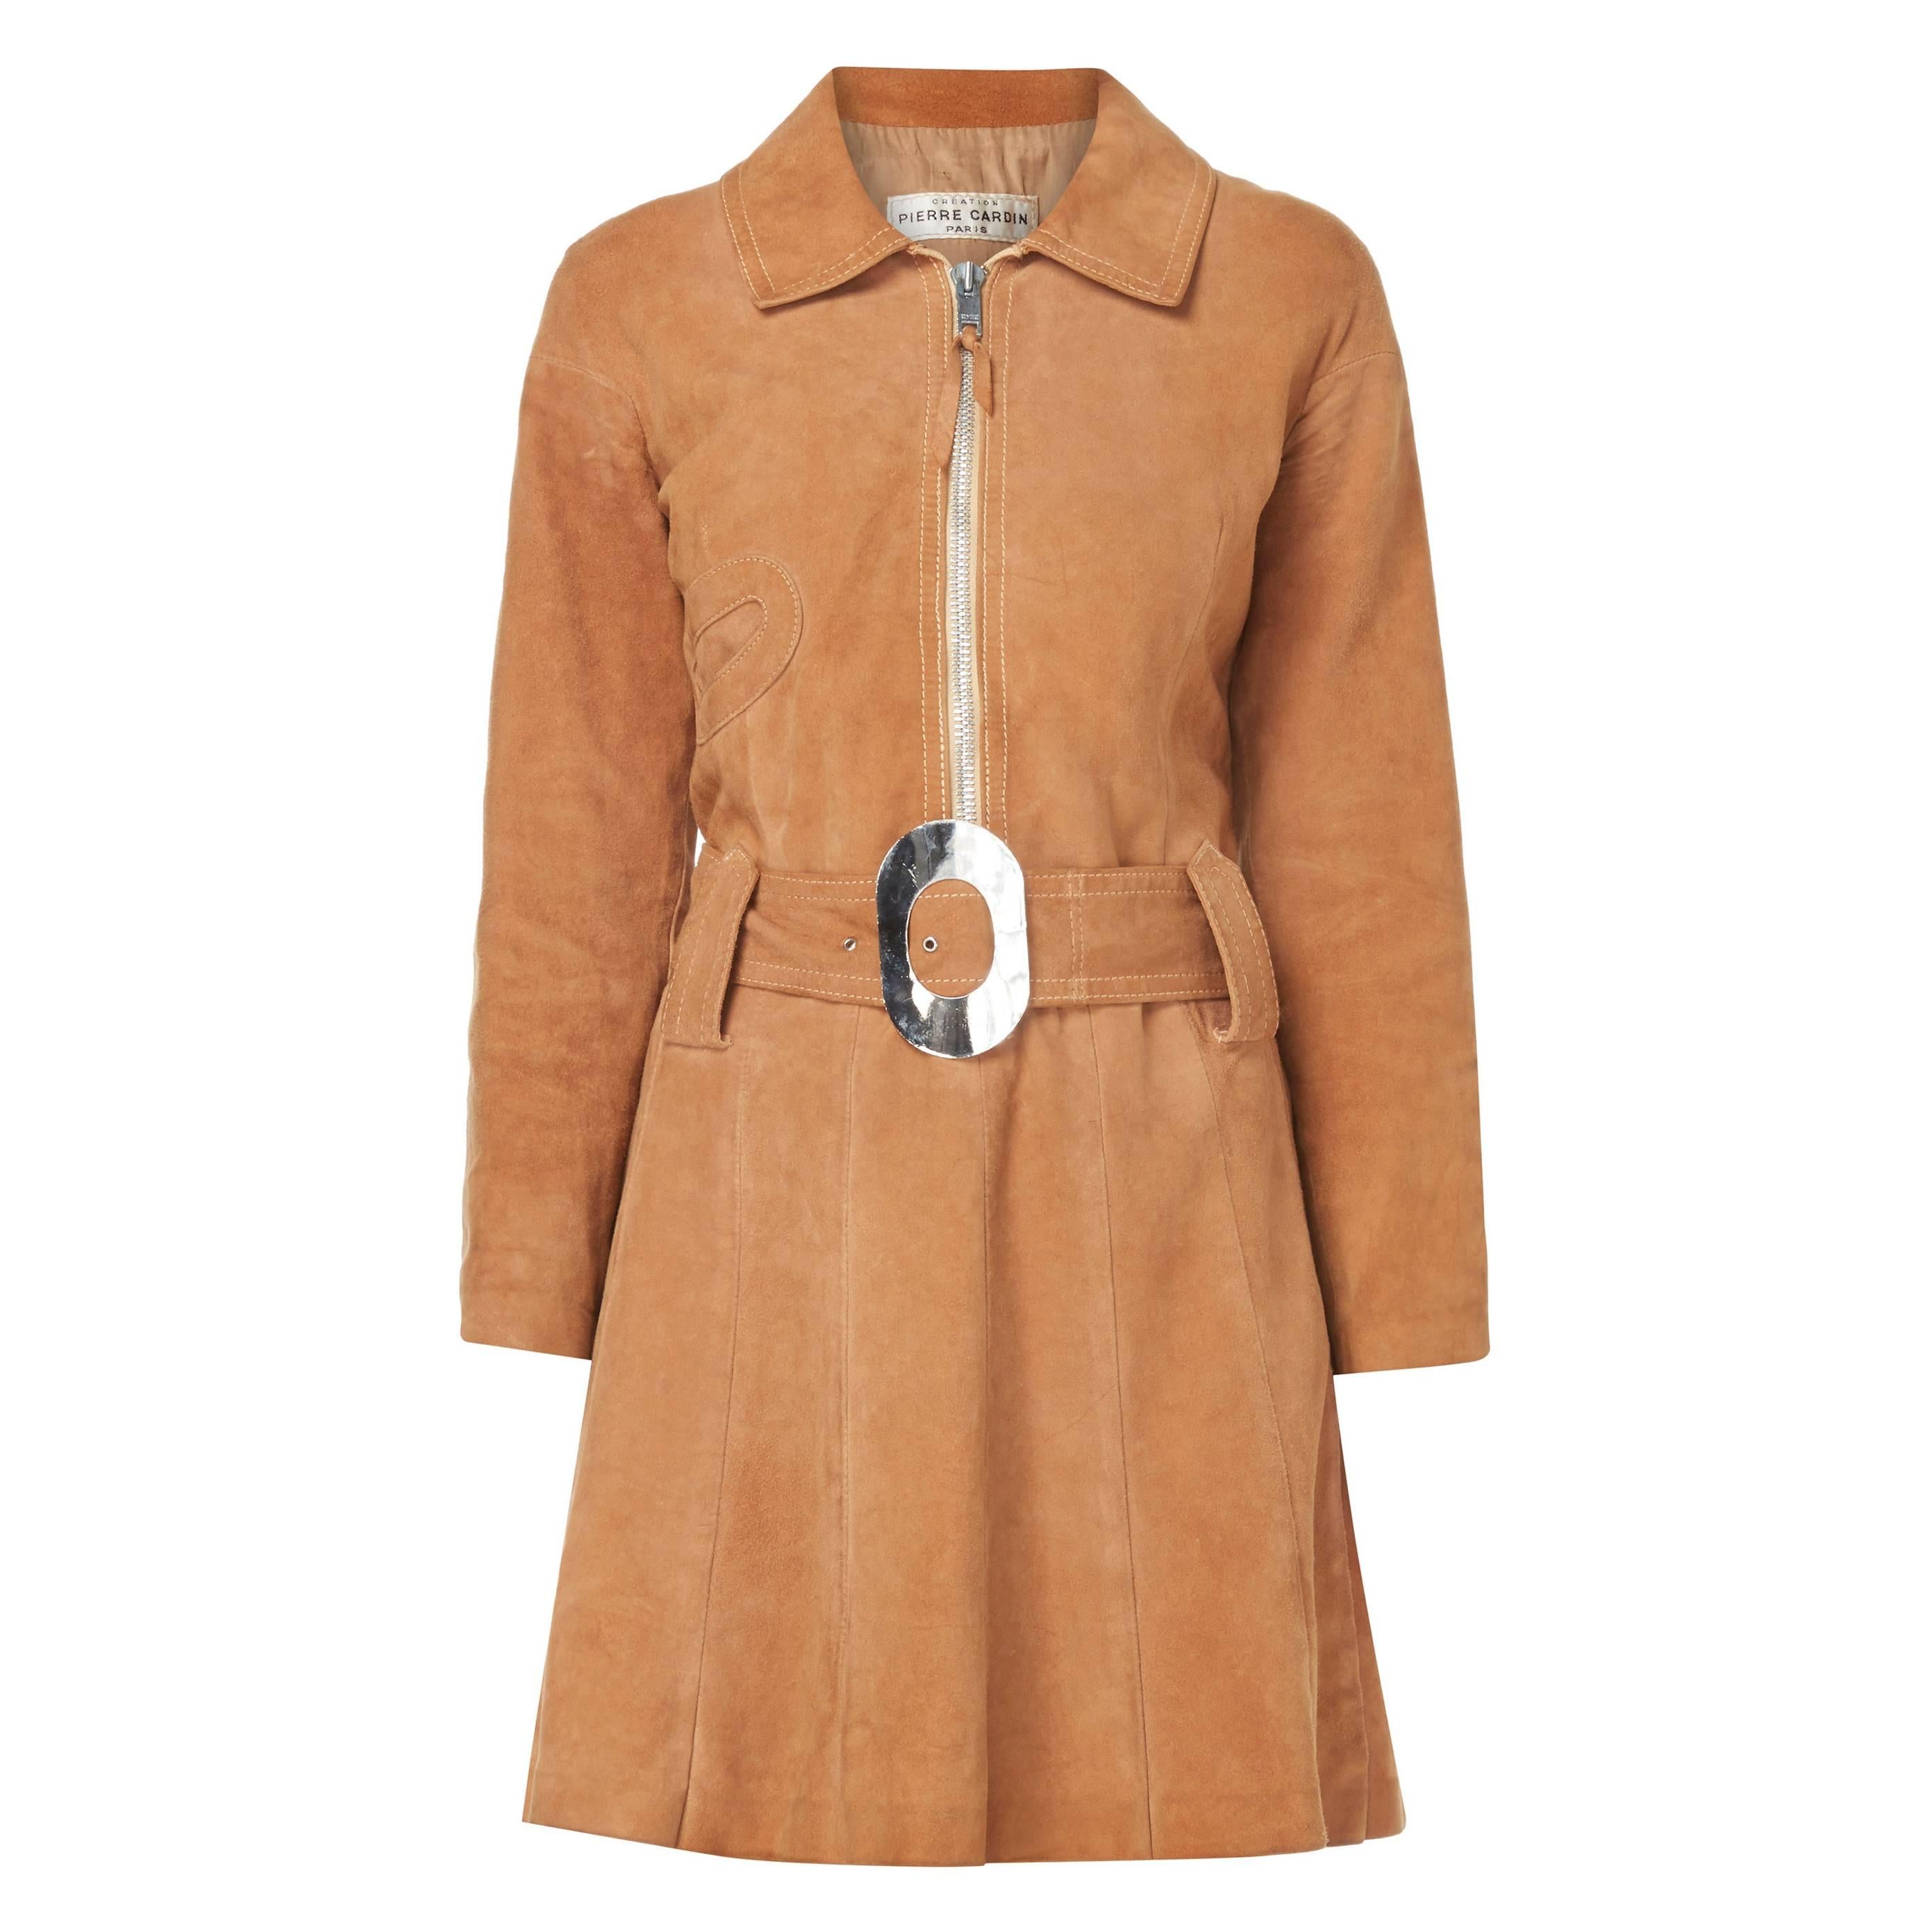 Pierre Cardin brown suede dress, circa 1968 For Sale